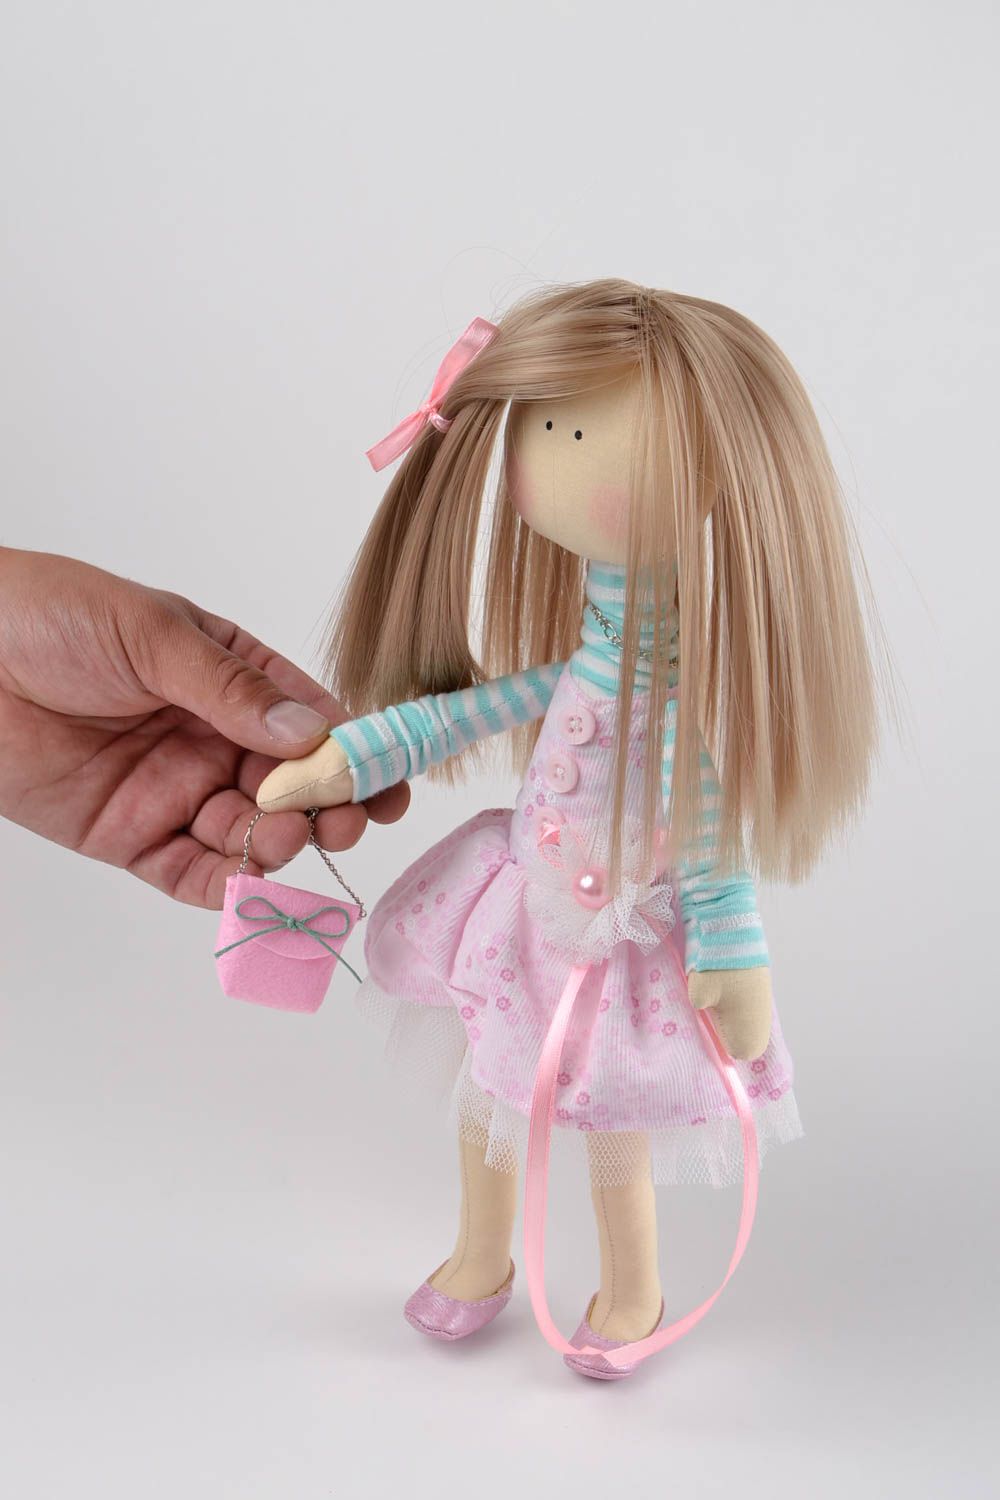 Handmade soft toy designer textile doll for girls stylish interior decoration photo 2